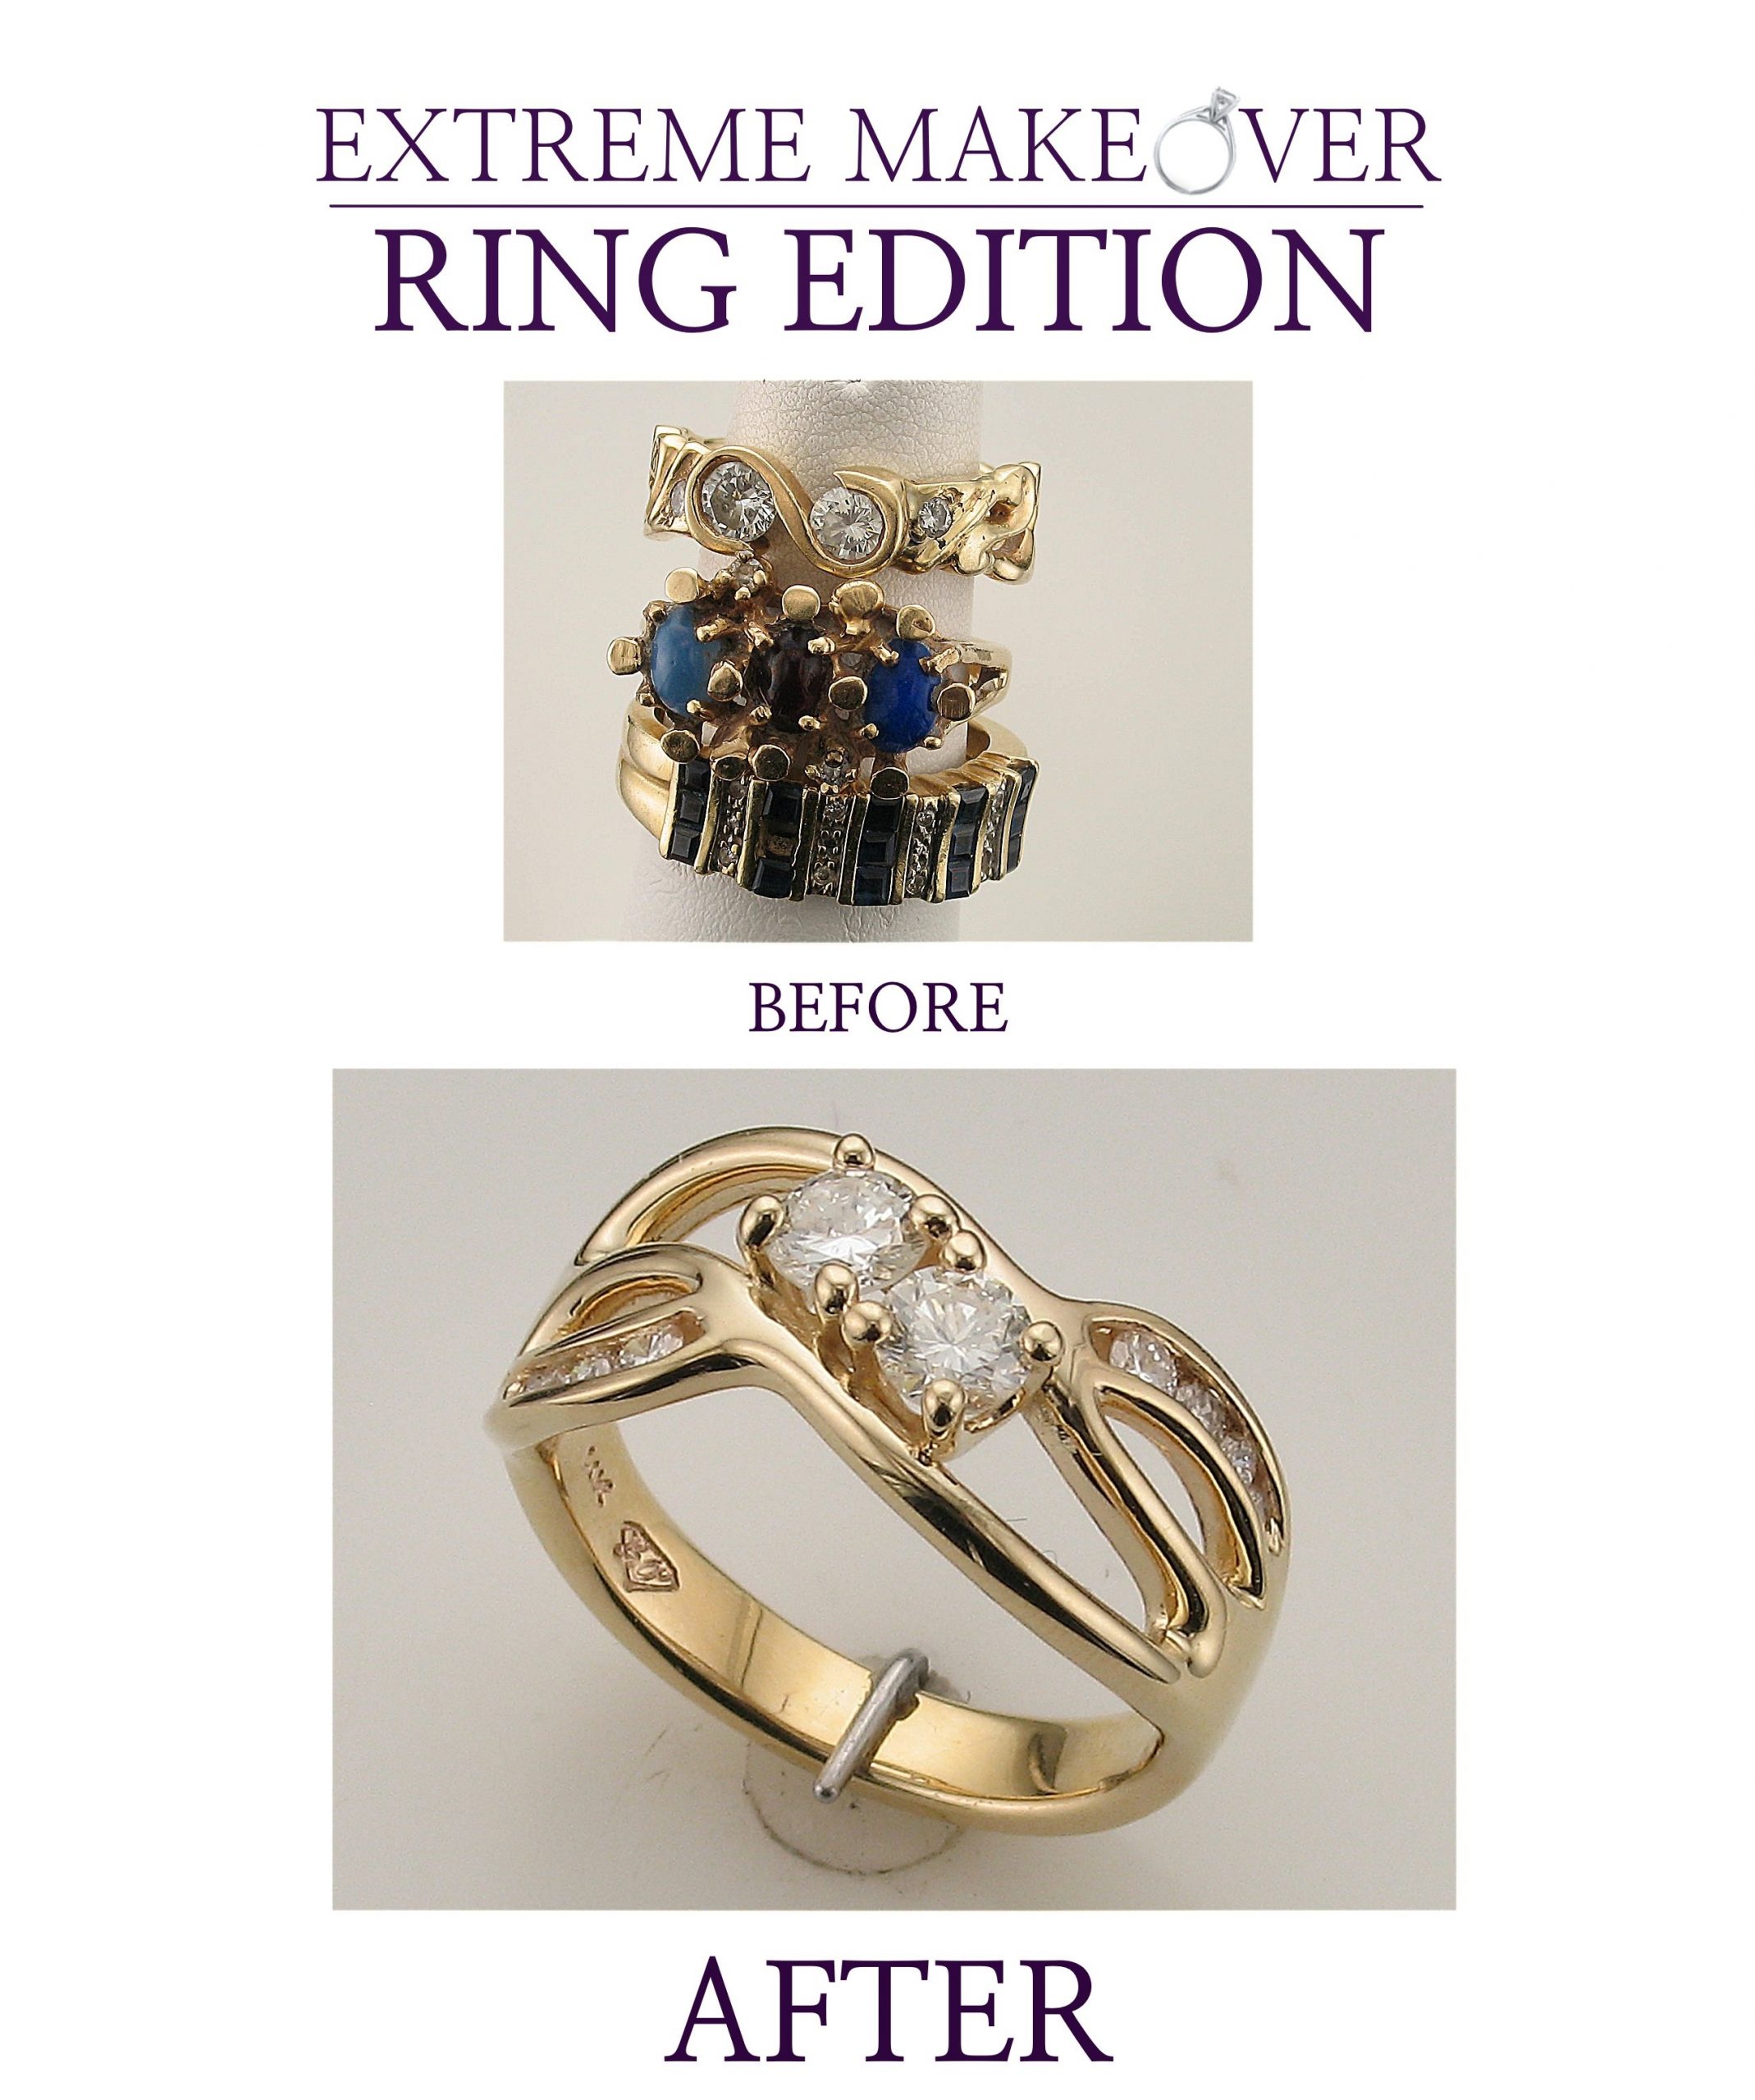 Recycled Custom Jewelry